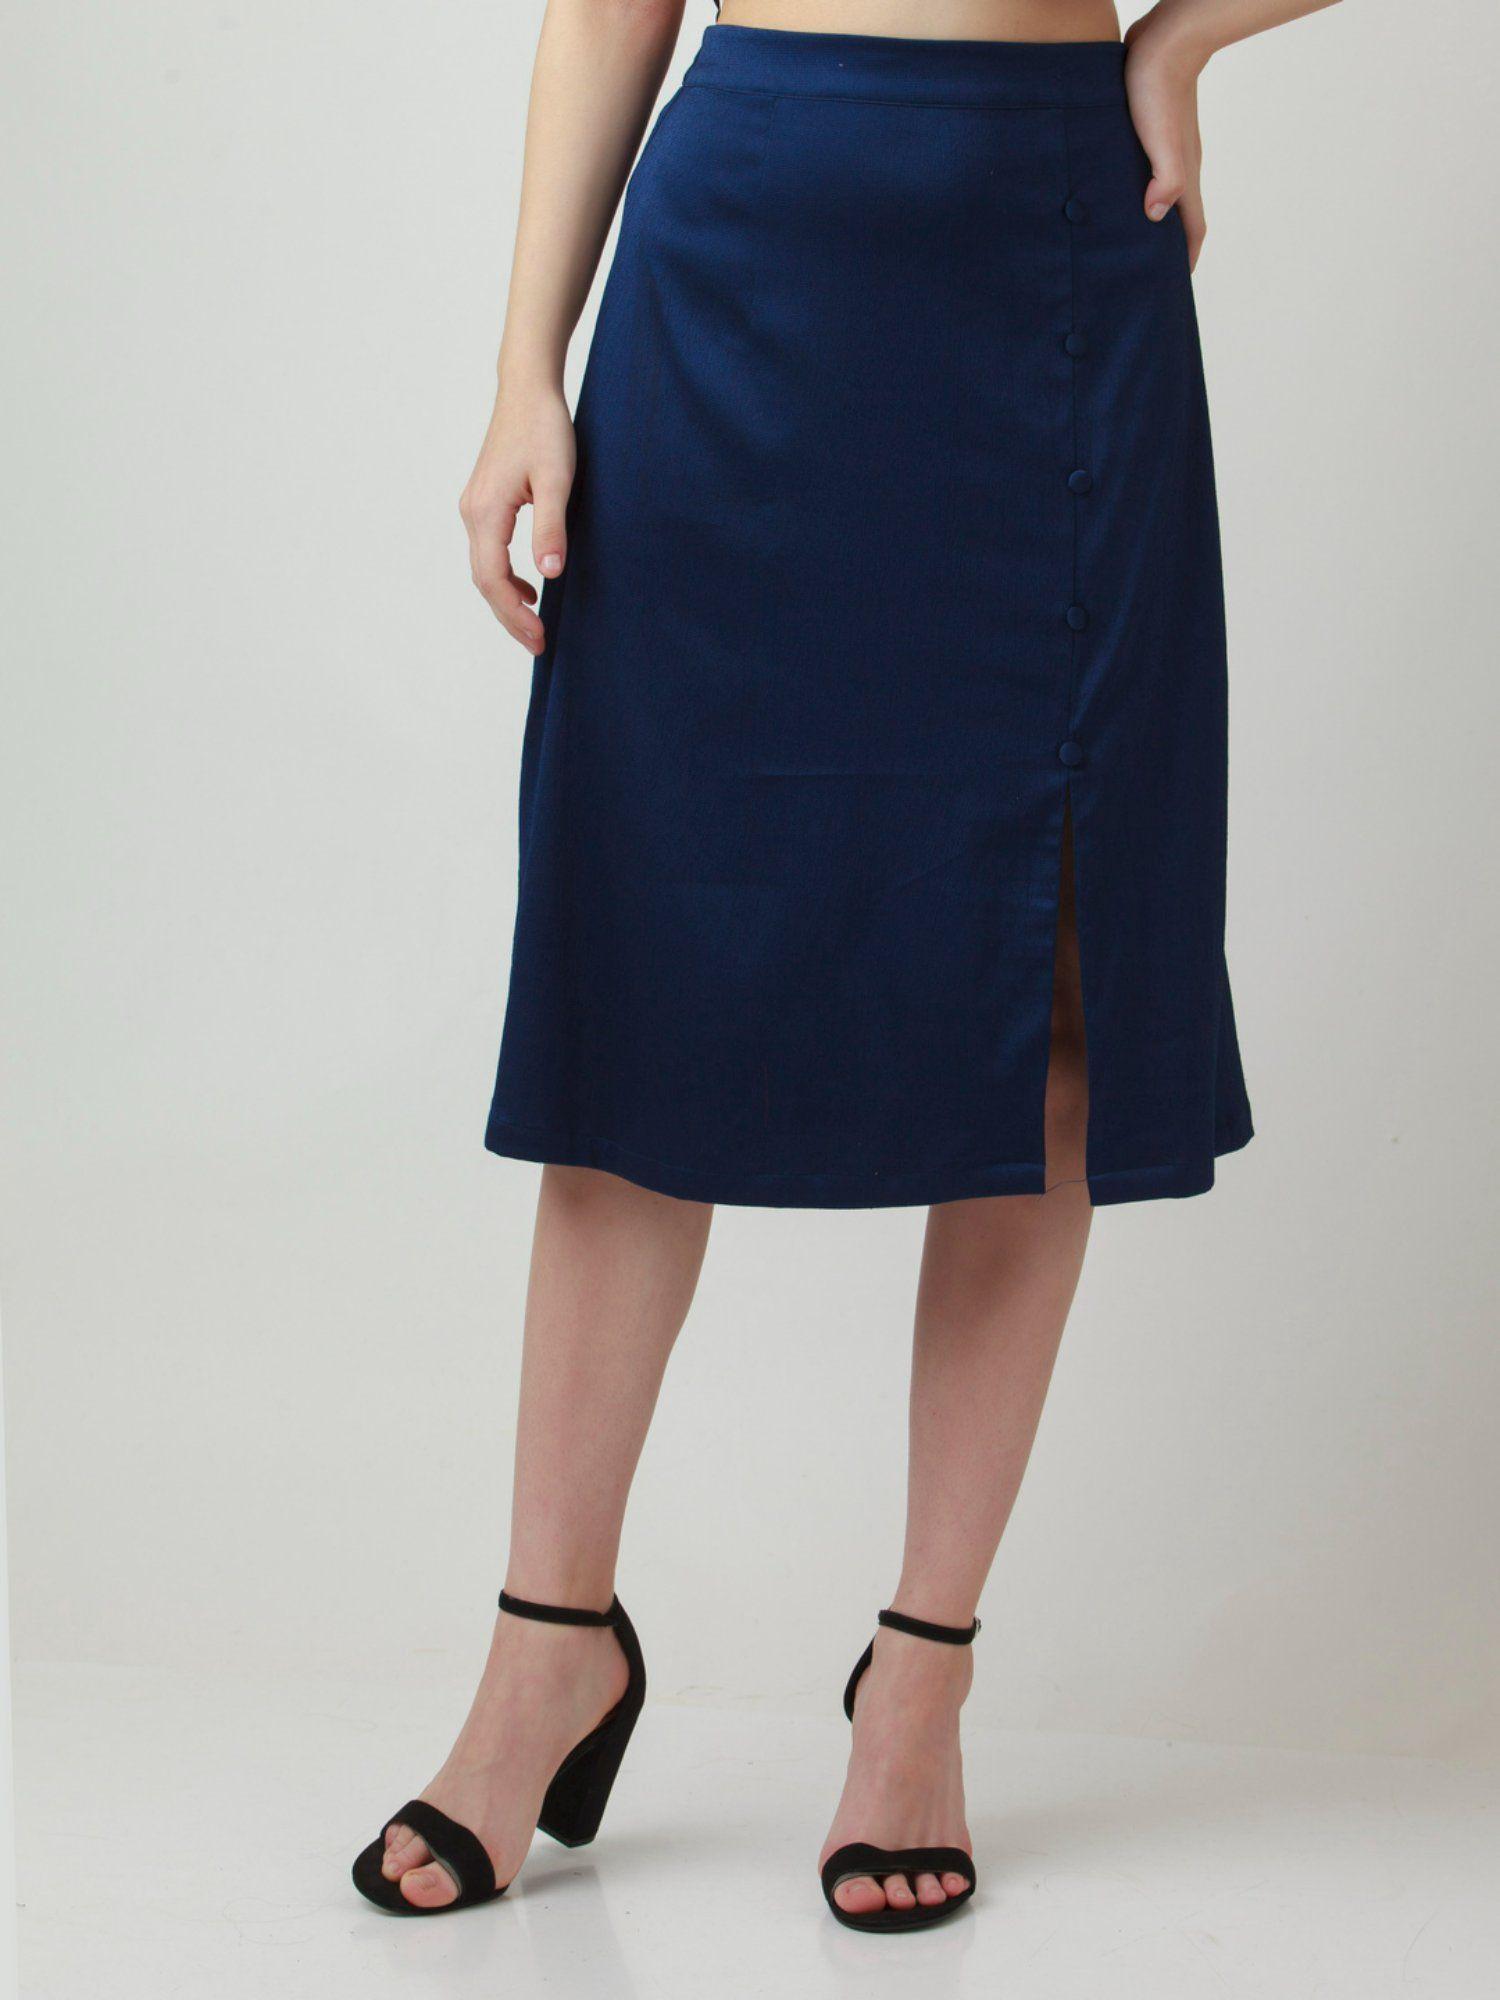 womens navy blue solid knee length skirt